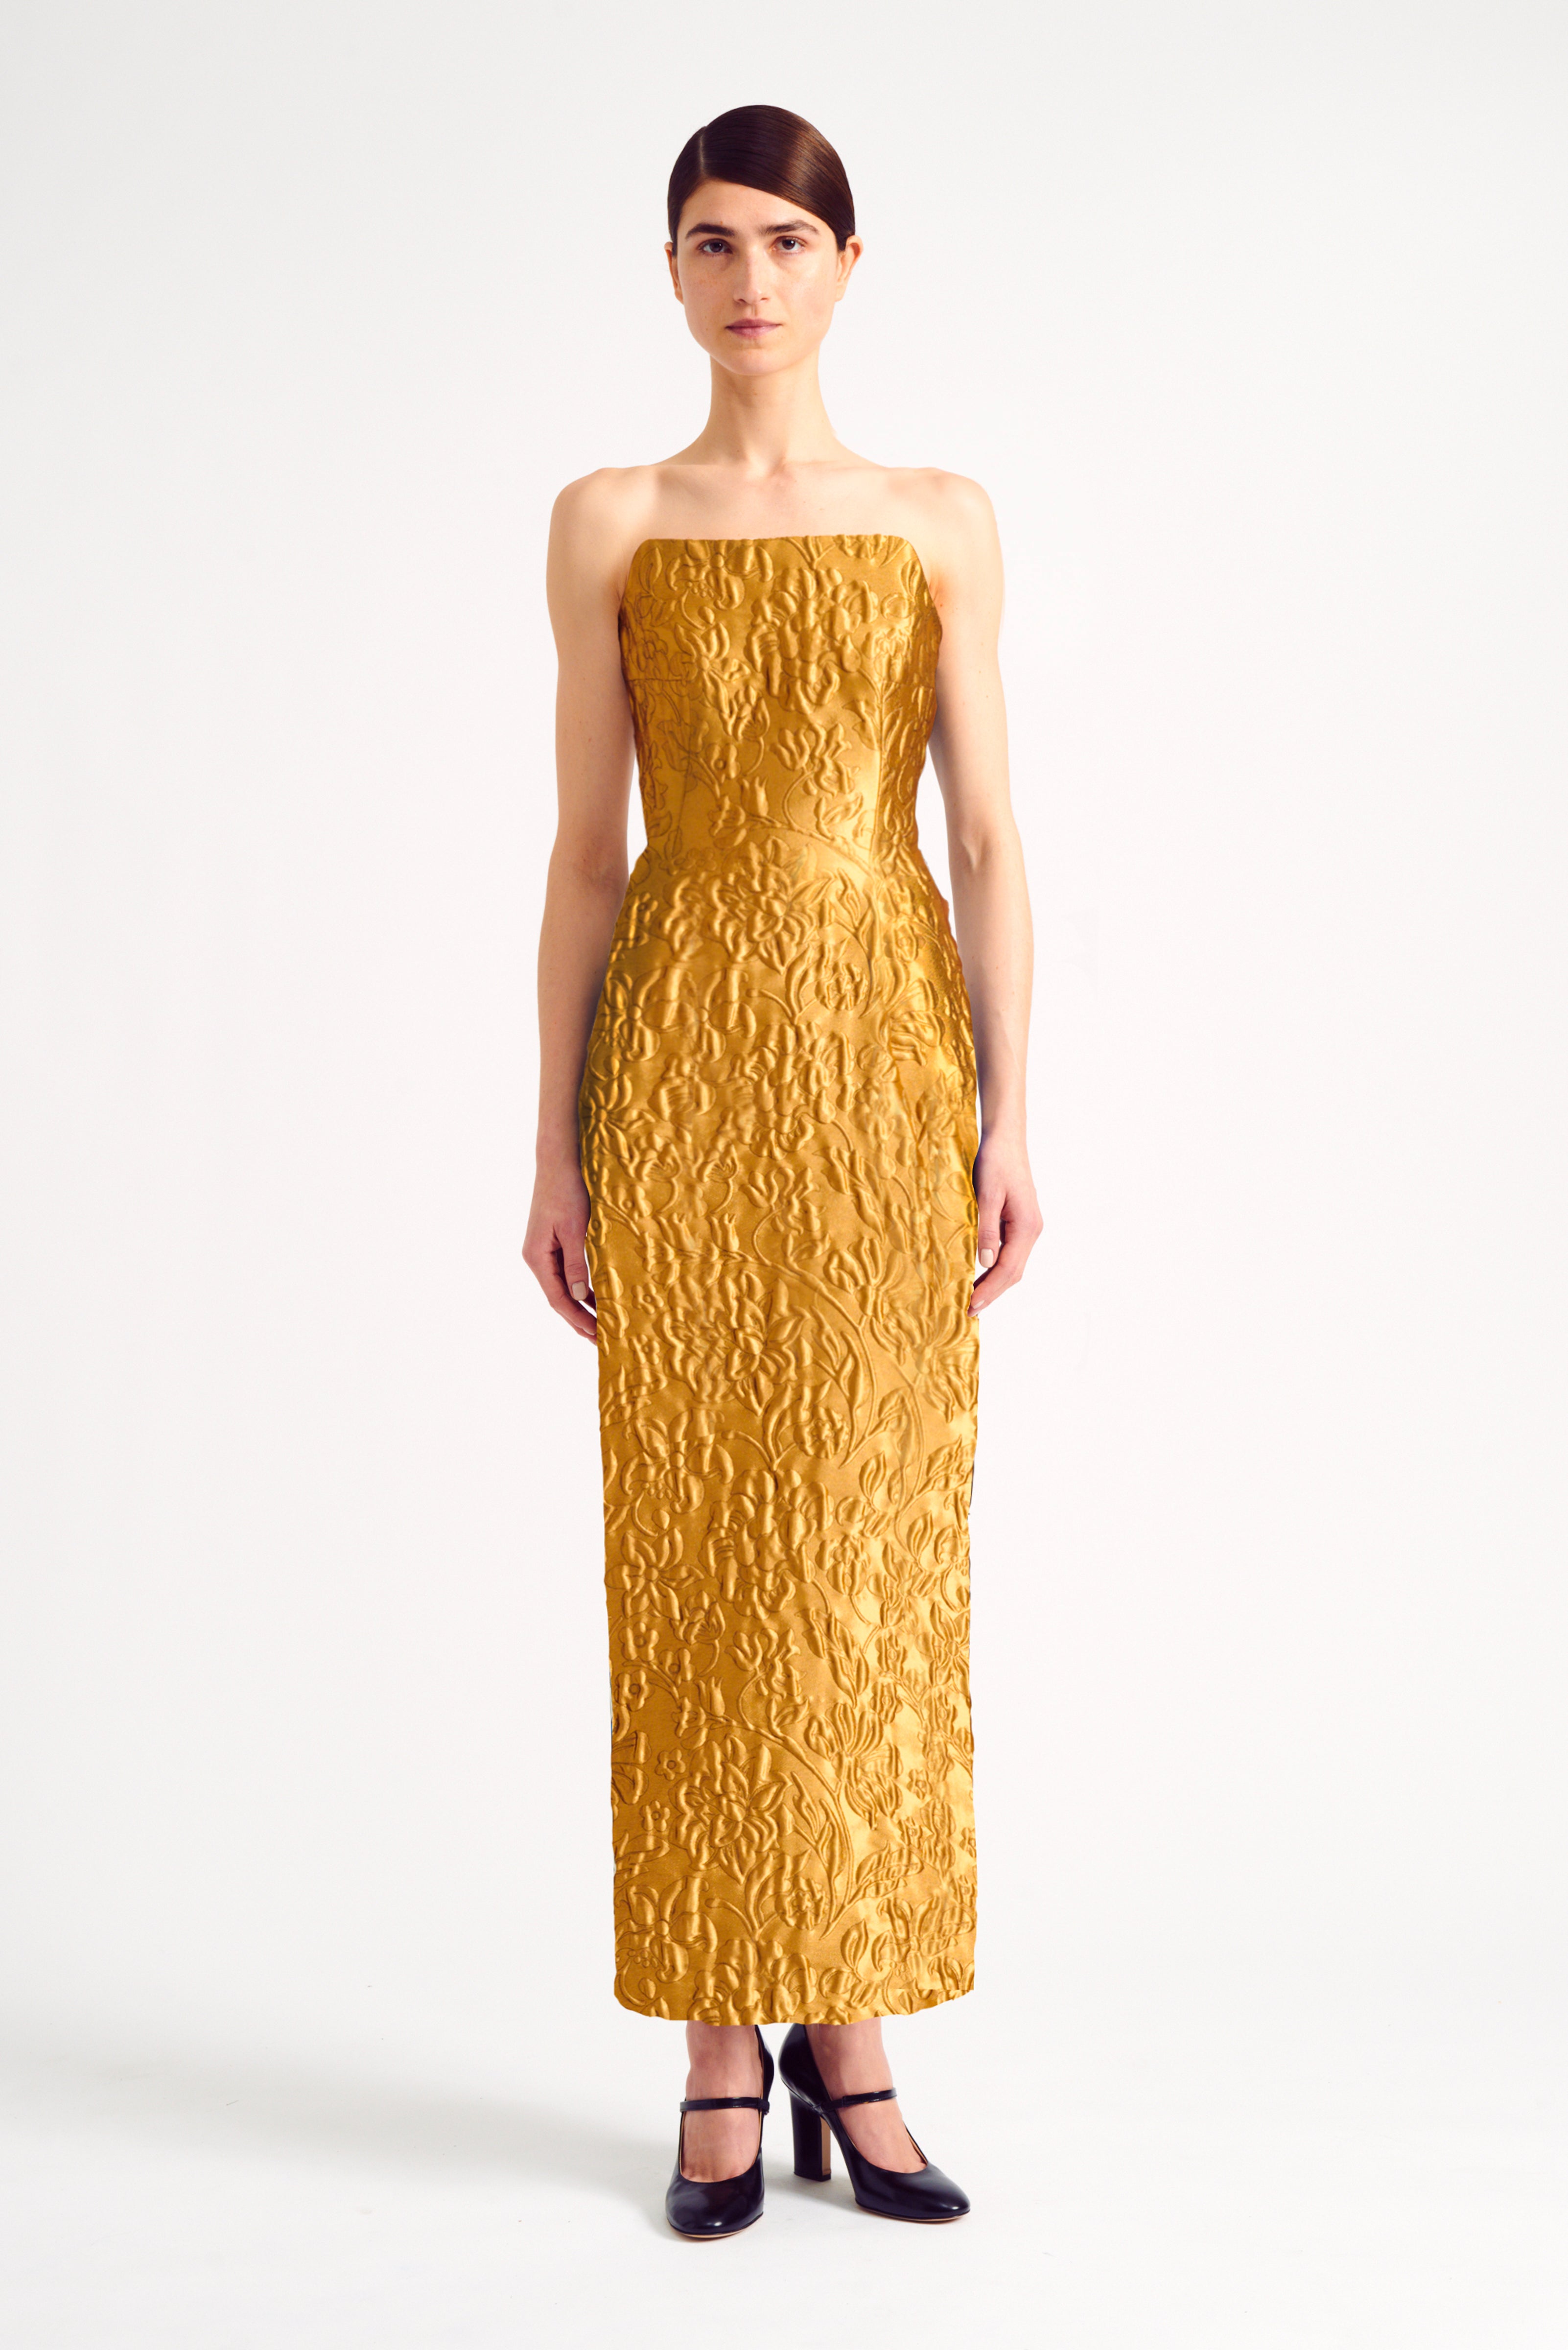 Laelia Strapless Dress in Gold Metallic Jacquard | Emilia Wickstead